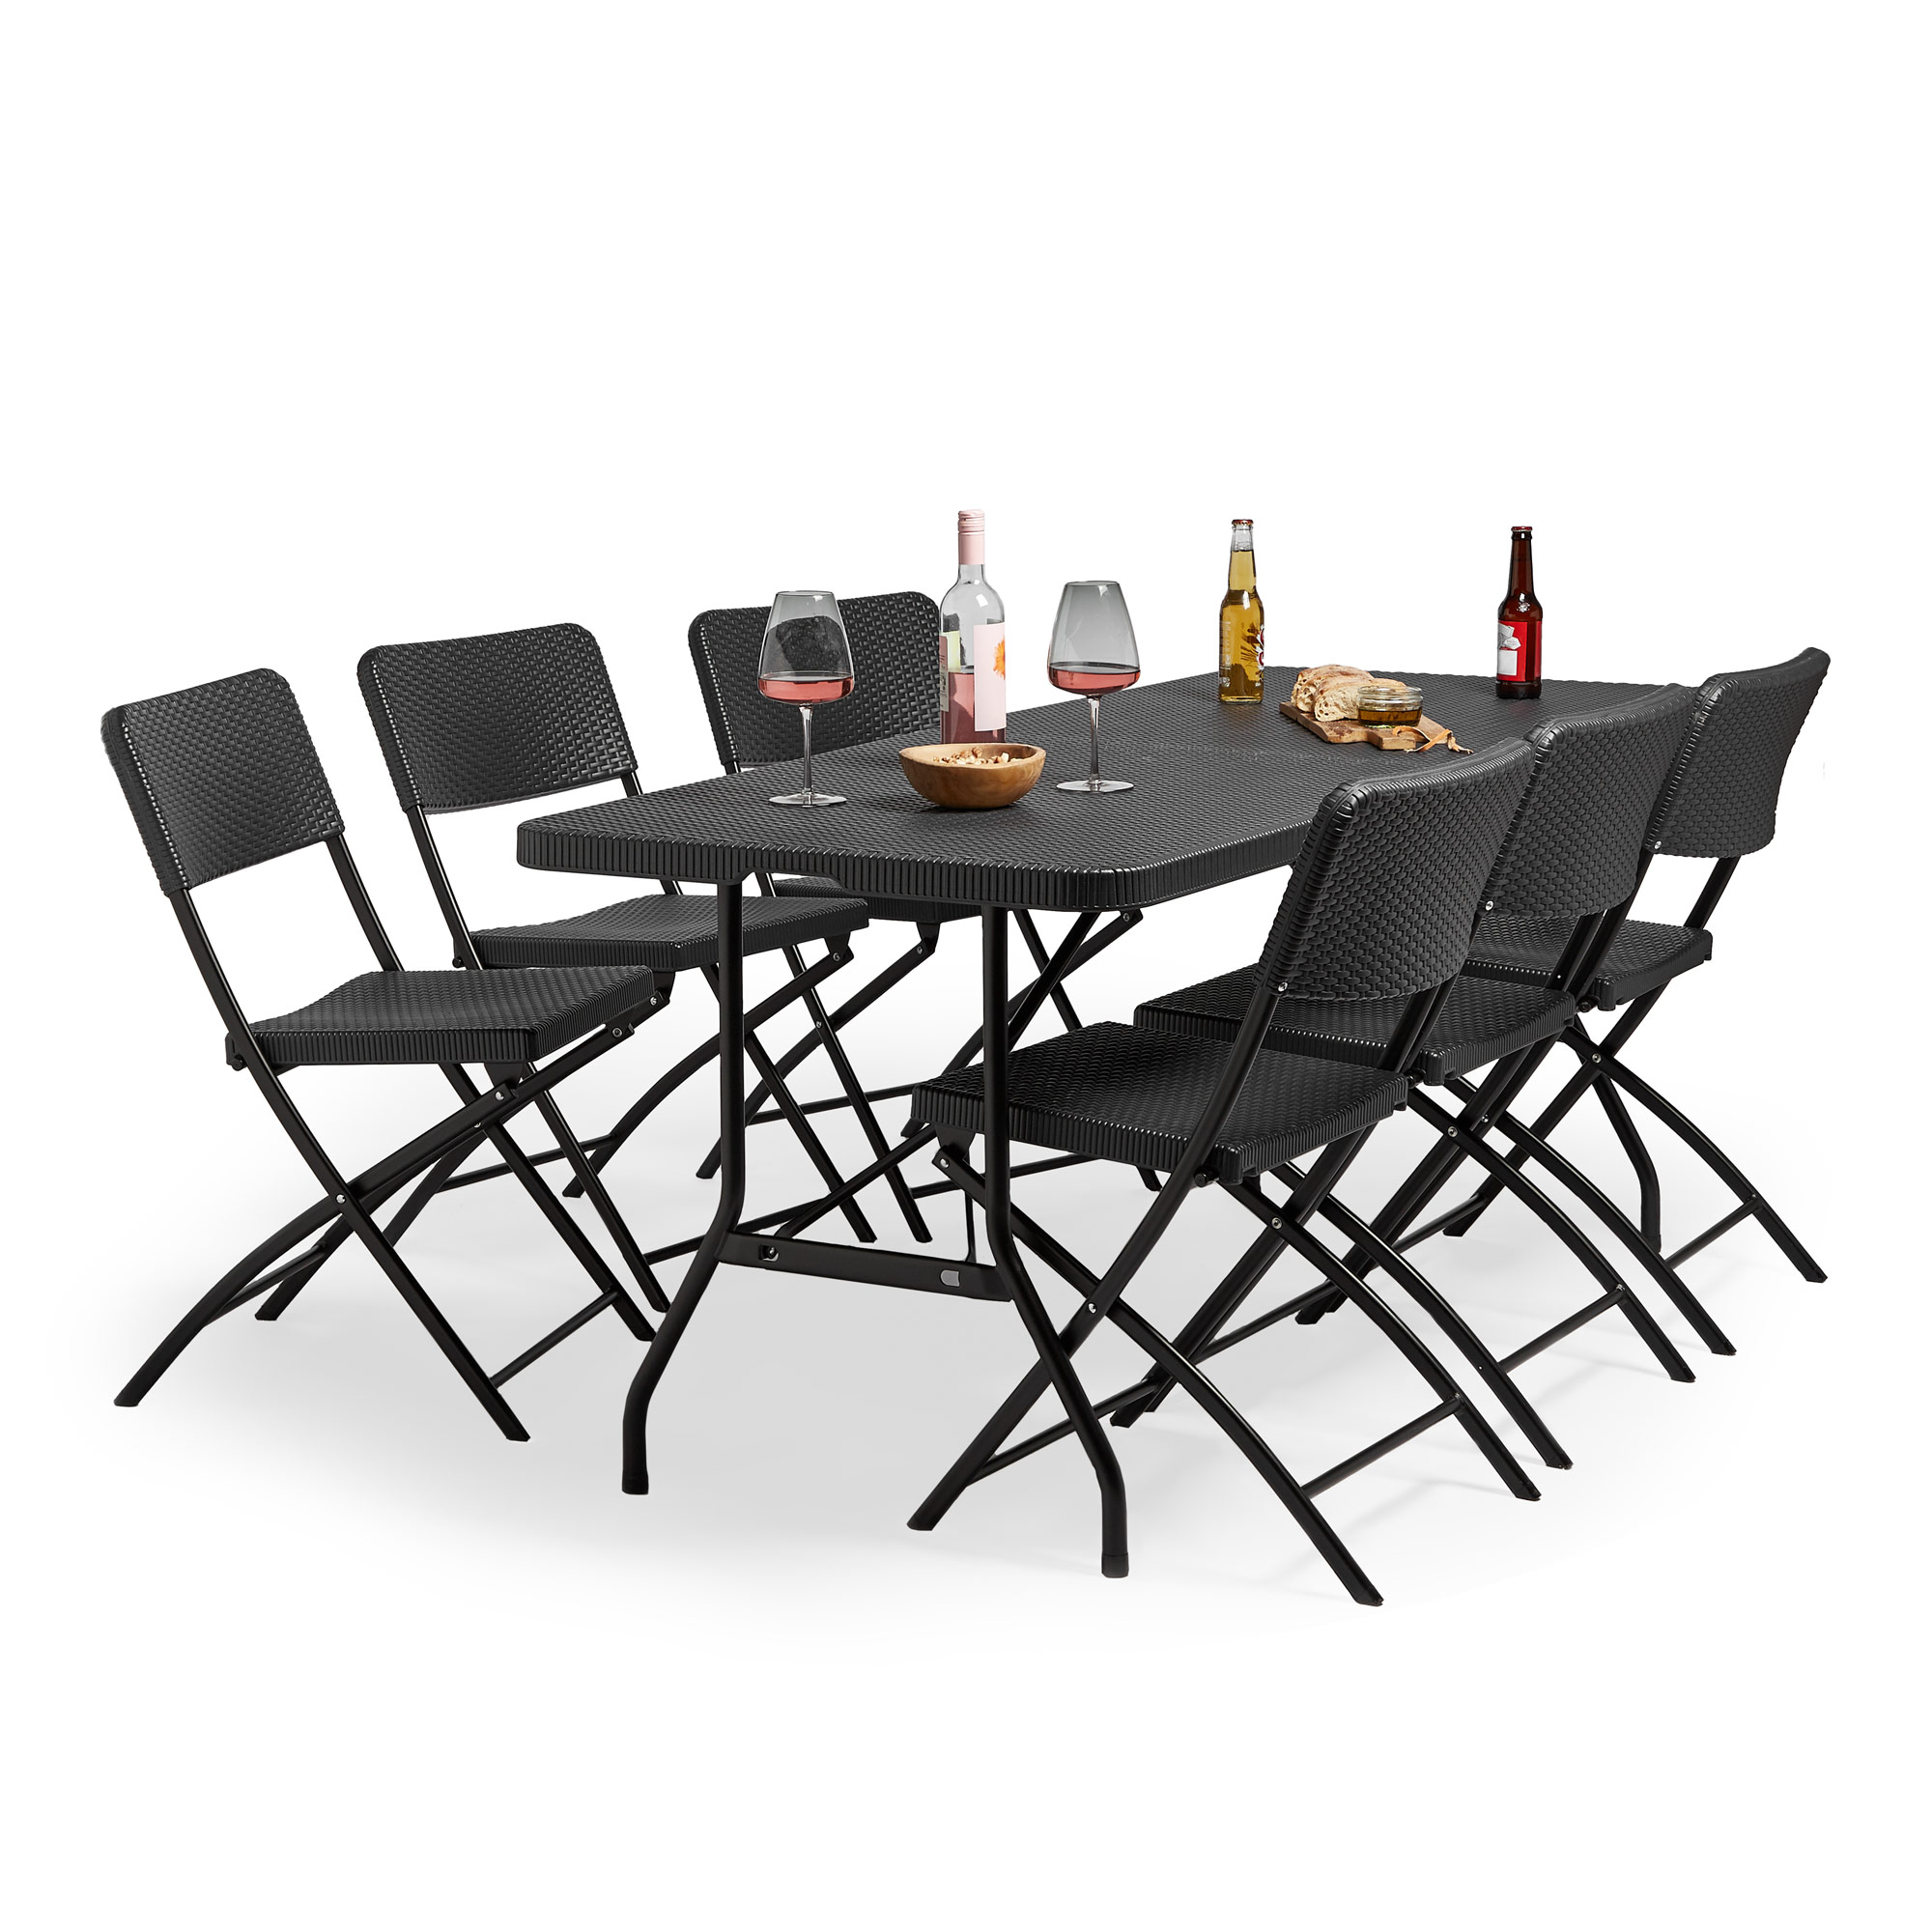 VonHaus Rattan Effect Dining Set – Folding Table Chairs Outdoor Garden Furniture